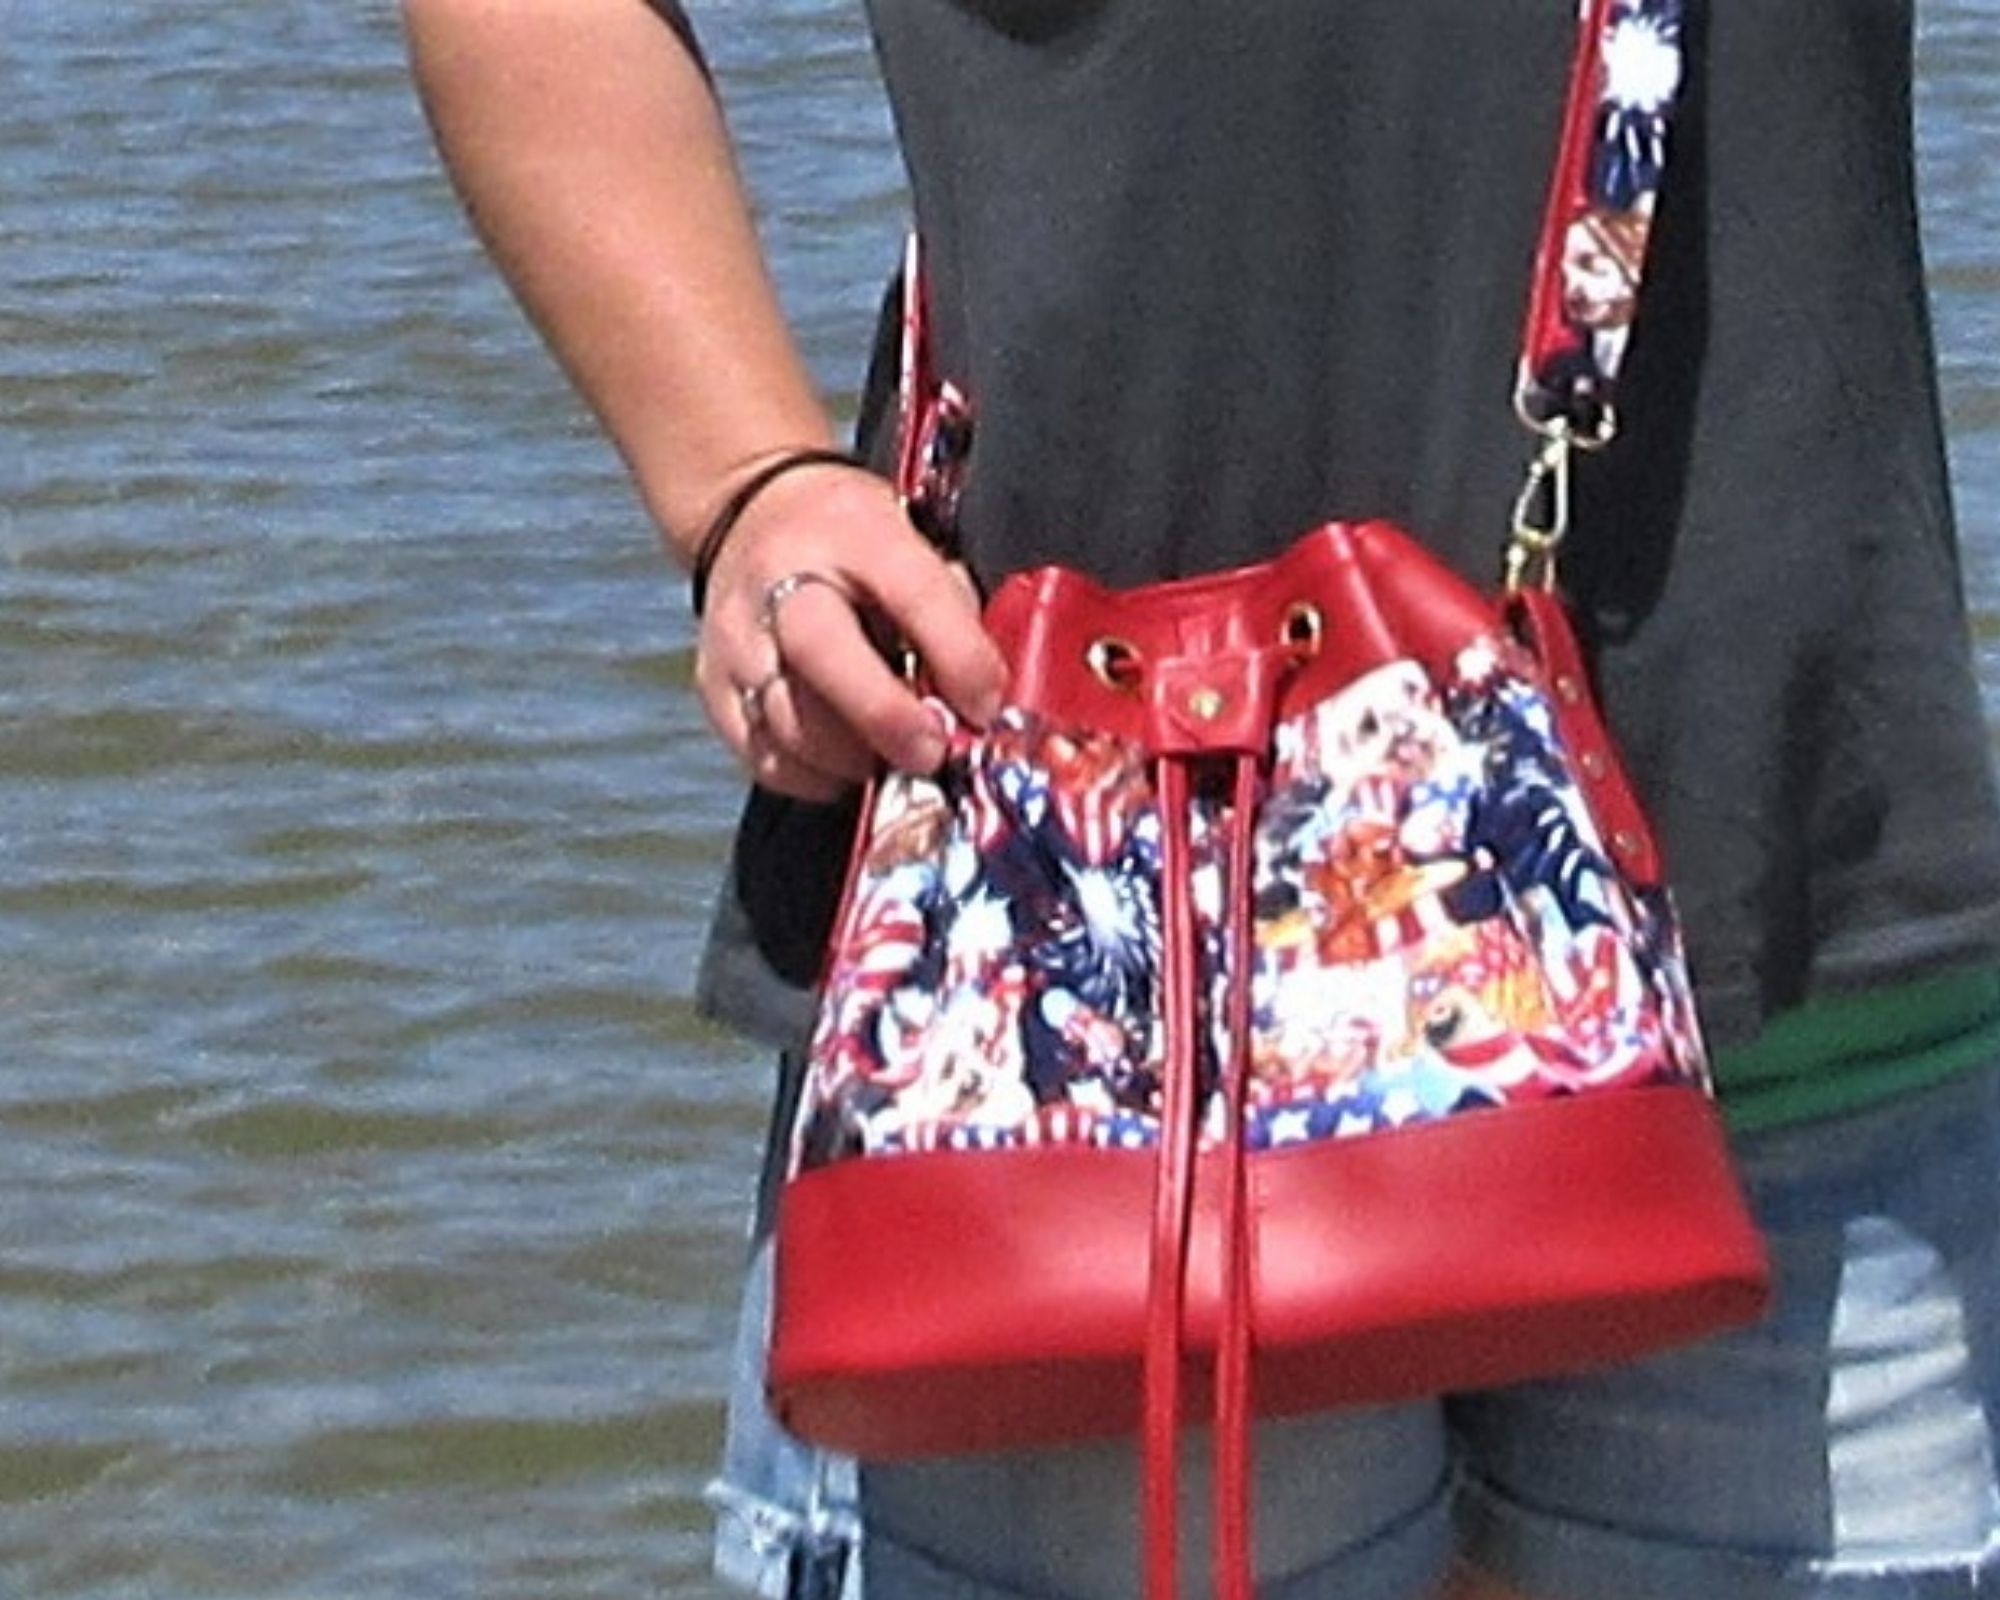 Red Bucket Bag, Cute Dog Purse, Dog Lover Gift